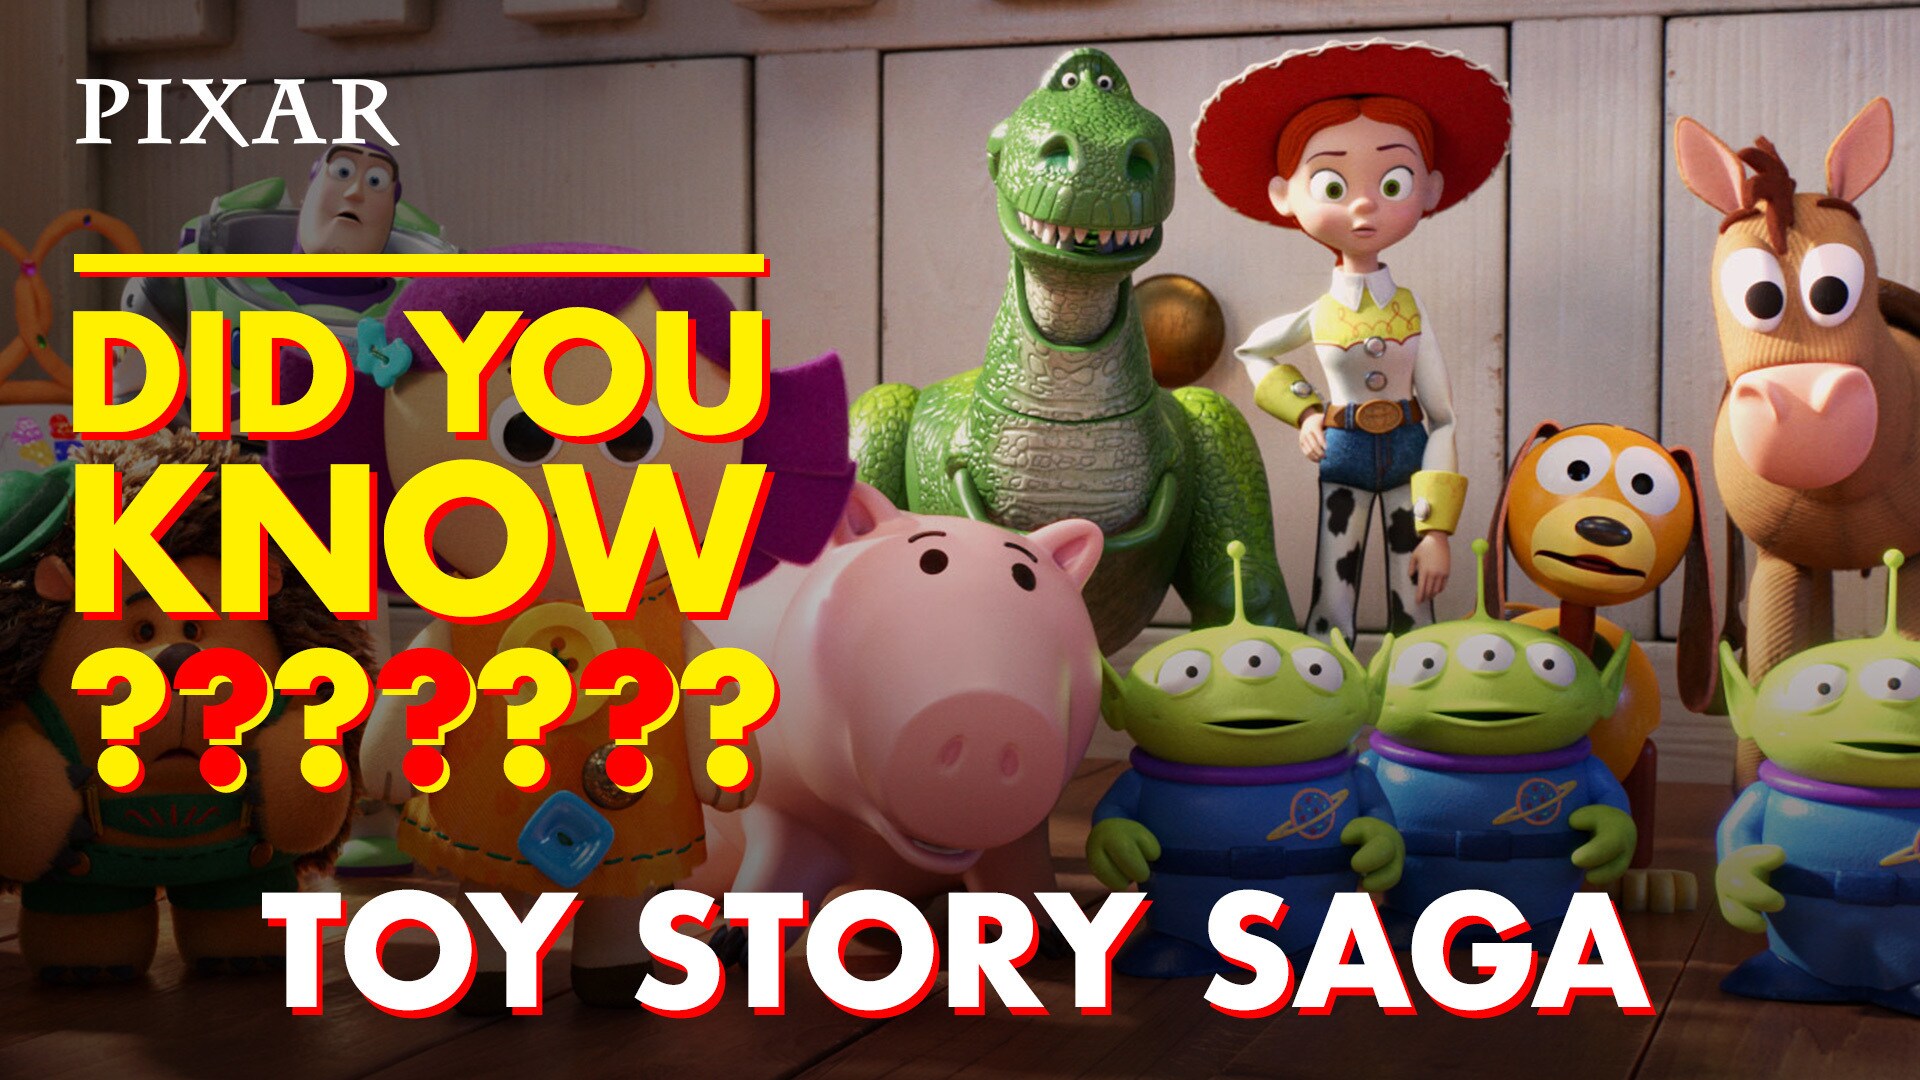 Toy Story Saga Fun Facts | Pixar Did You Know?